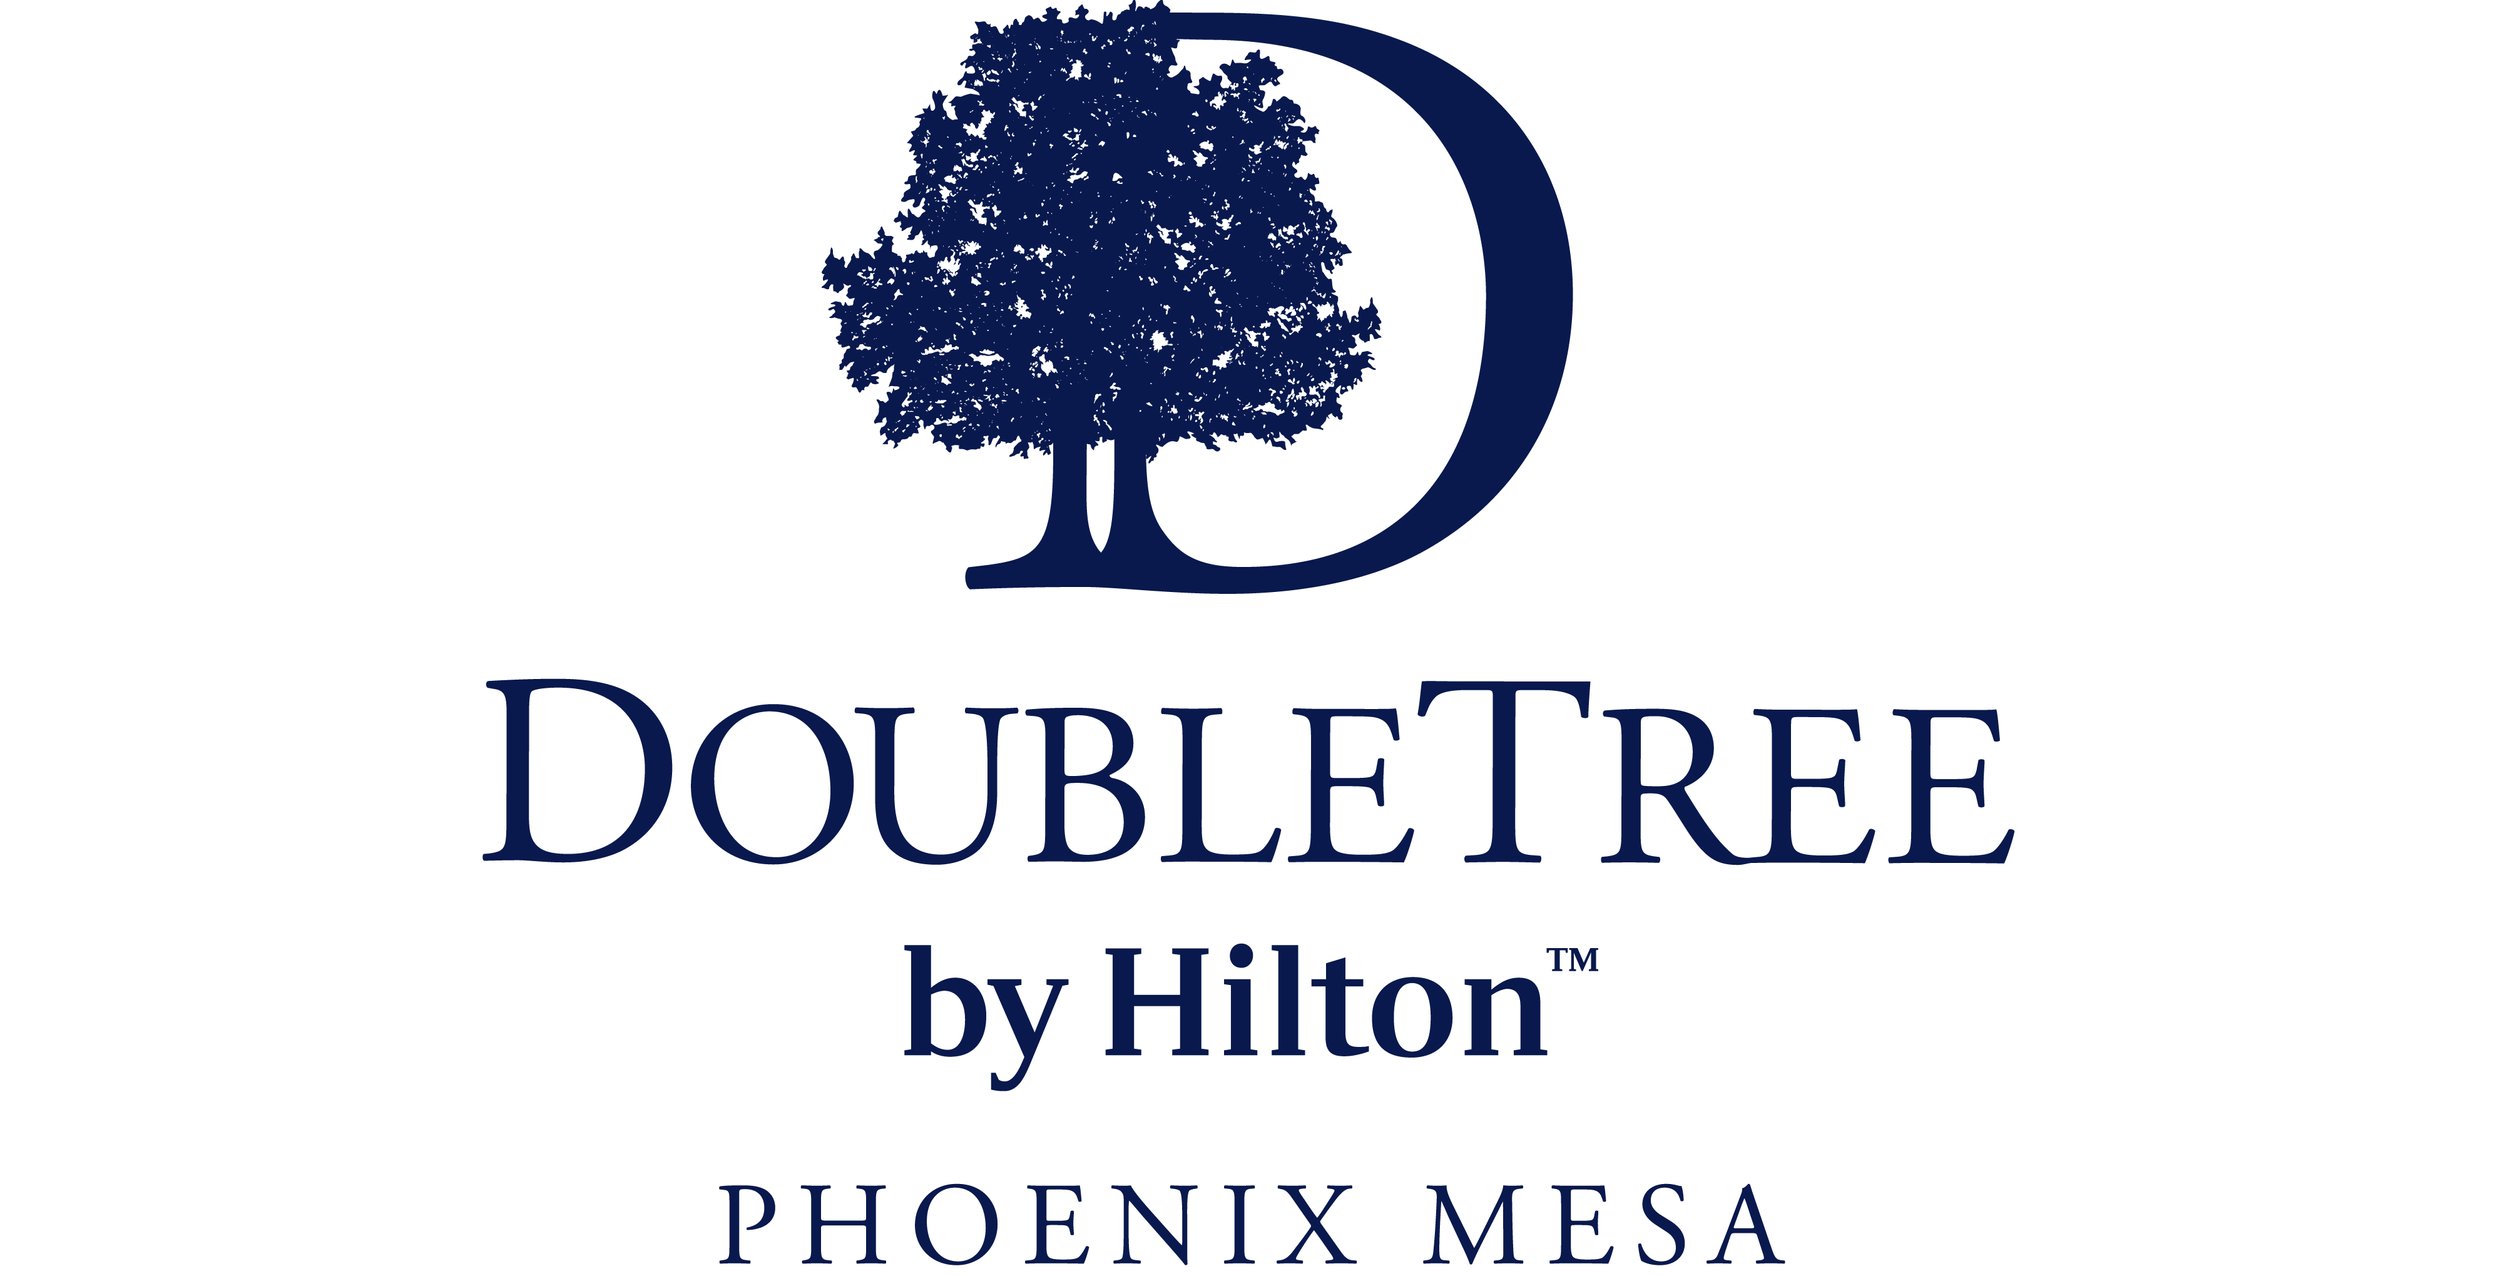 Doubletree Phoenix Mesa Logo.jpg